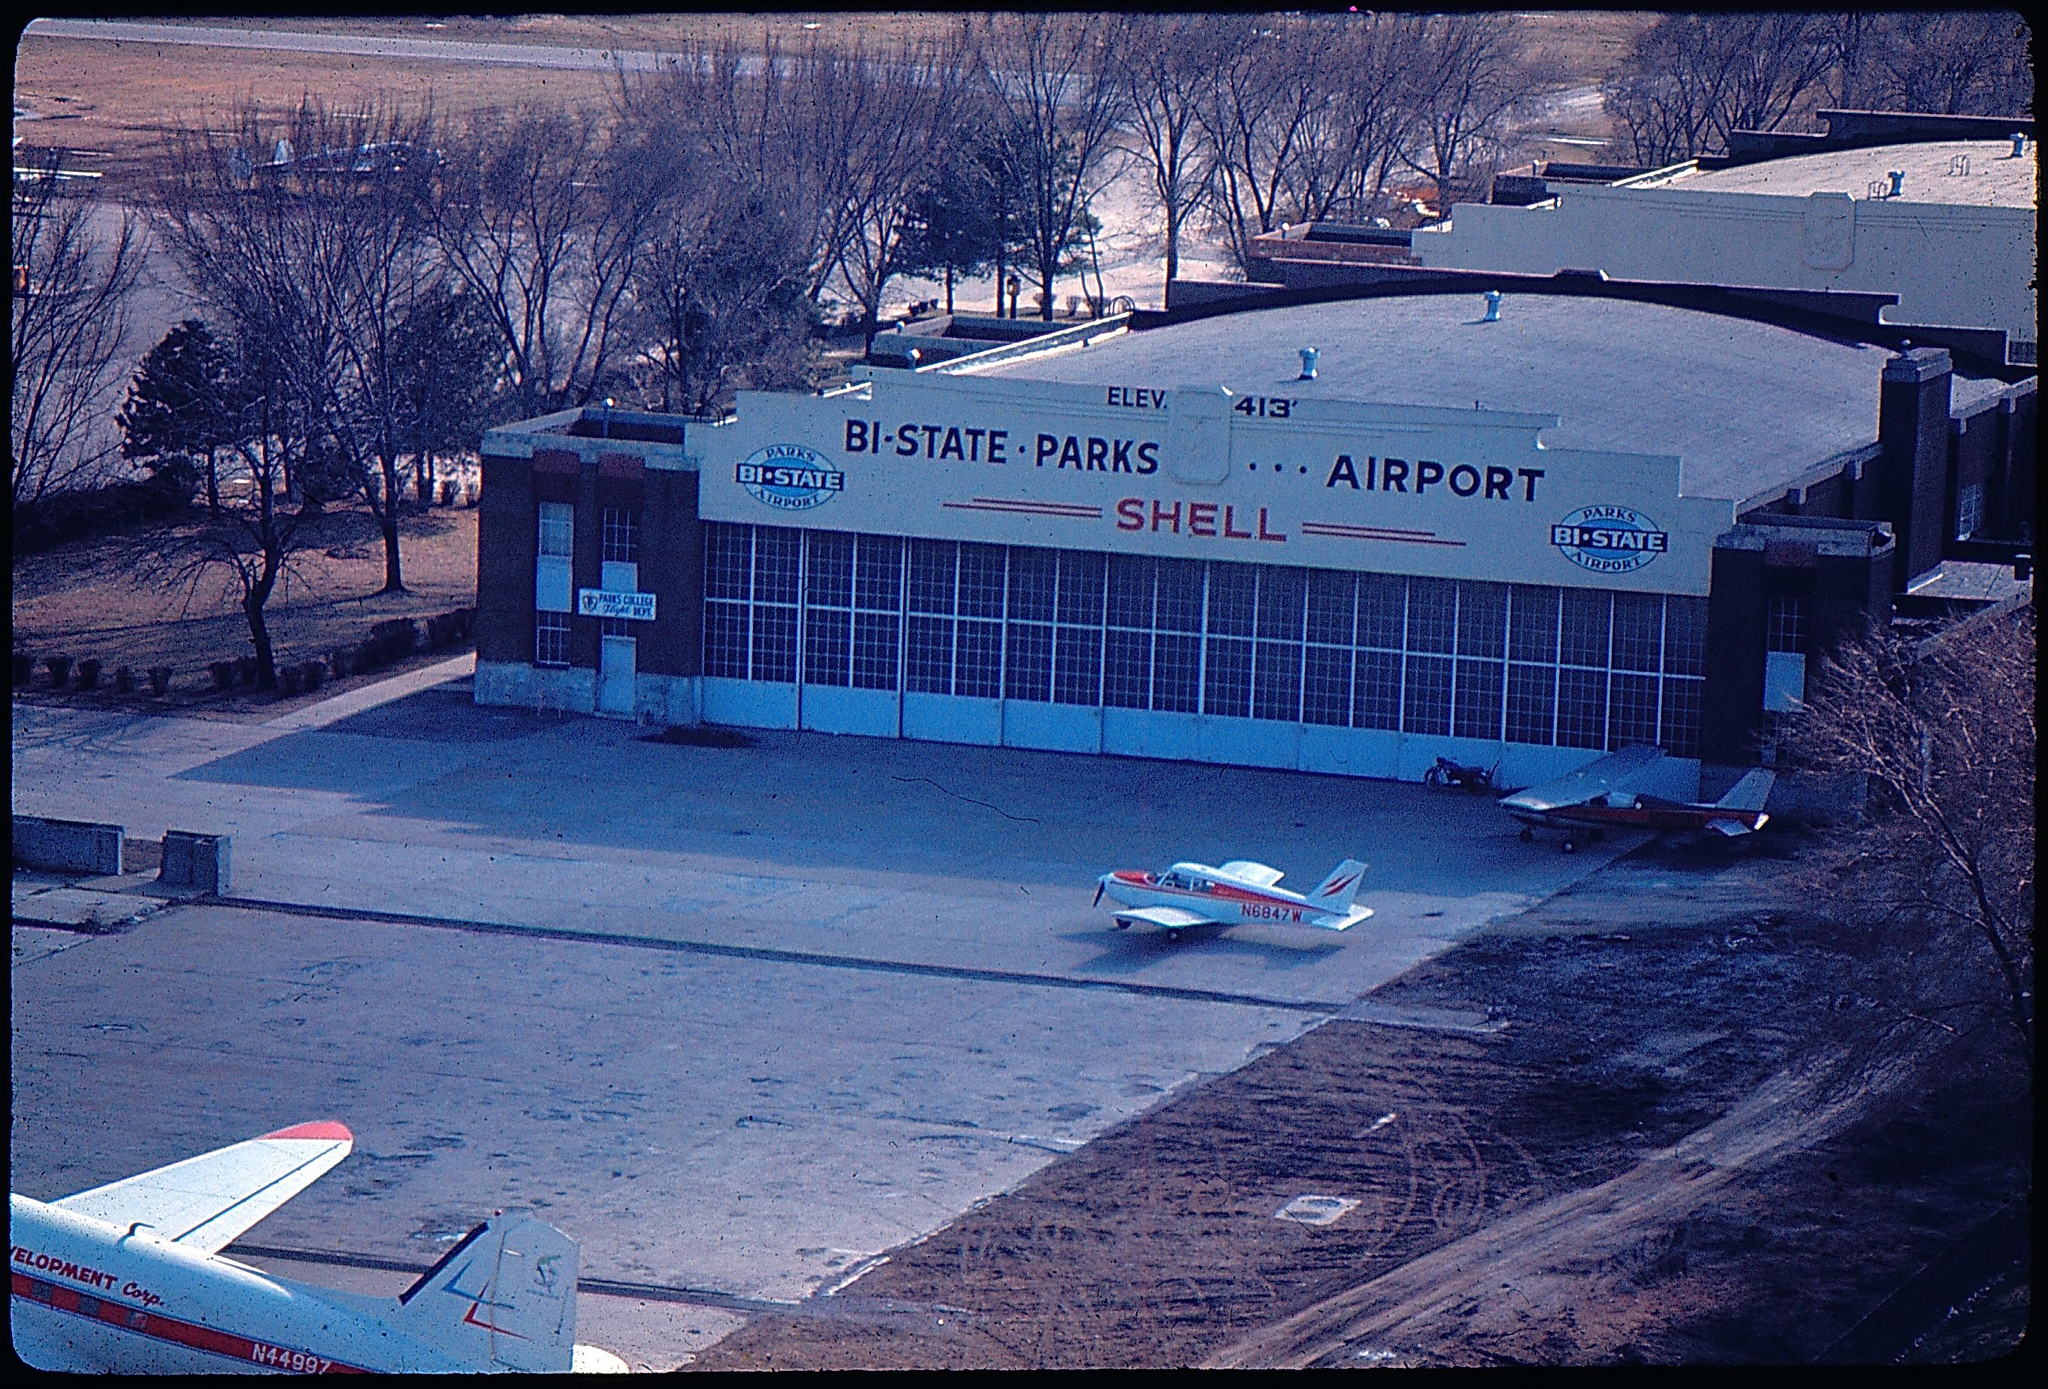 Bi-State Parks Airport